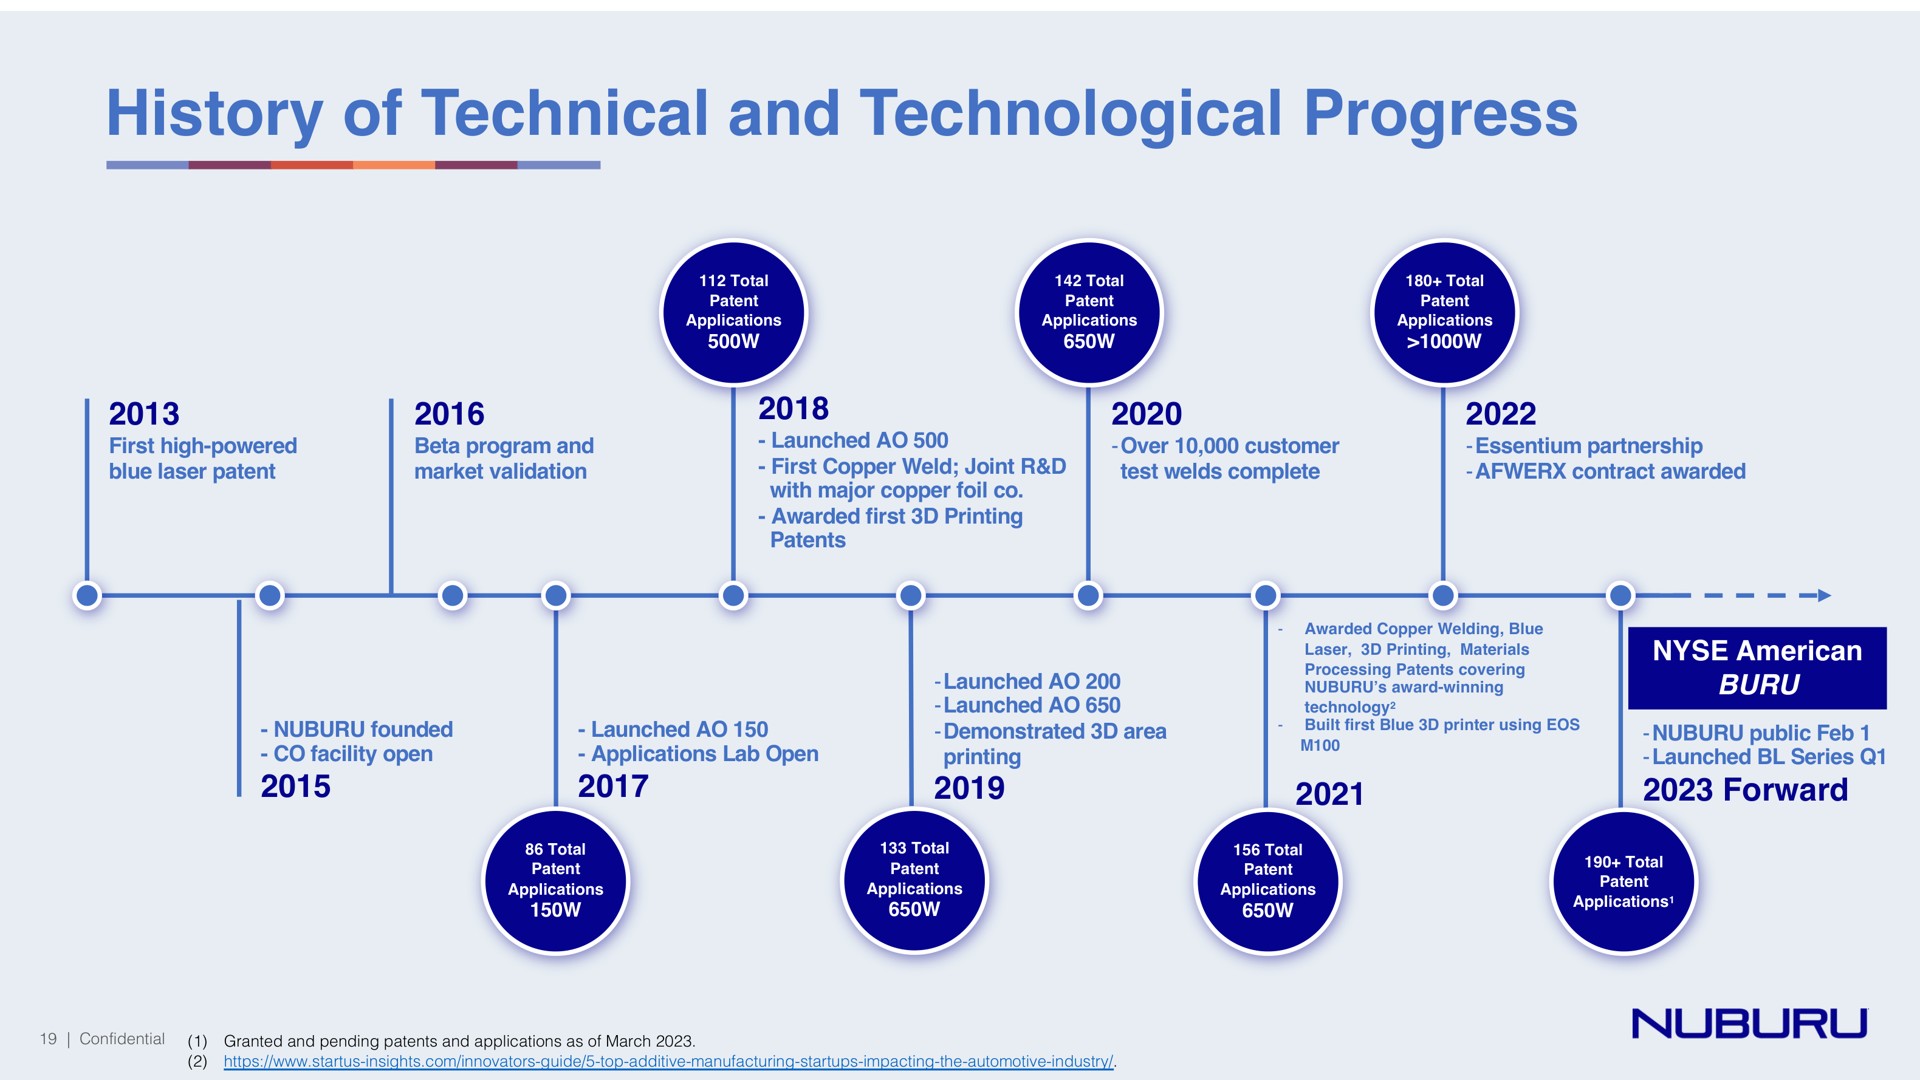 history of technical and technological progress | NUBURU